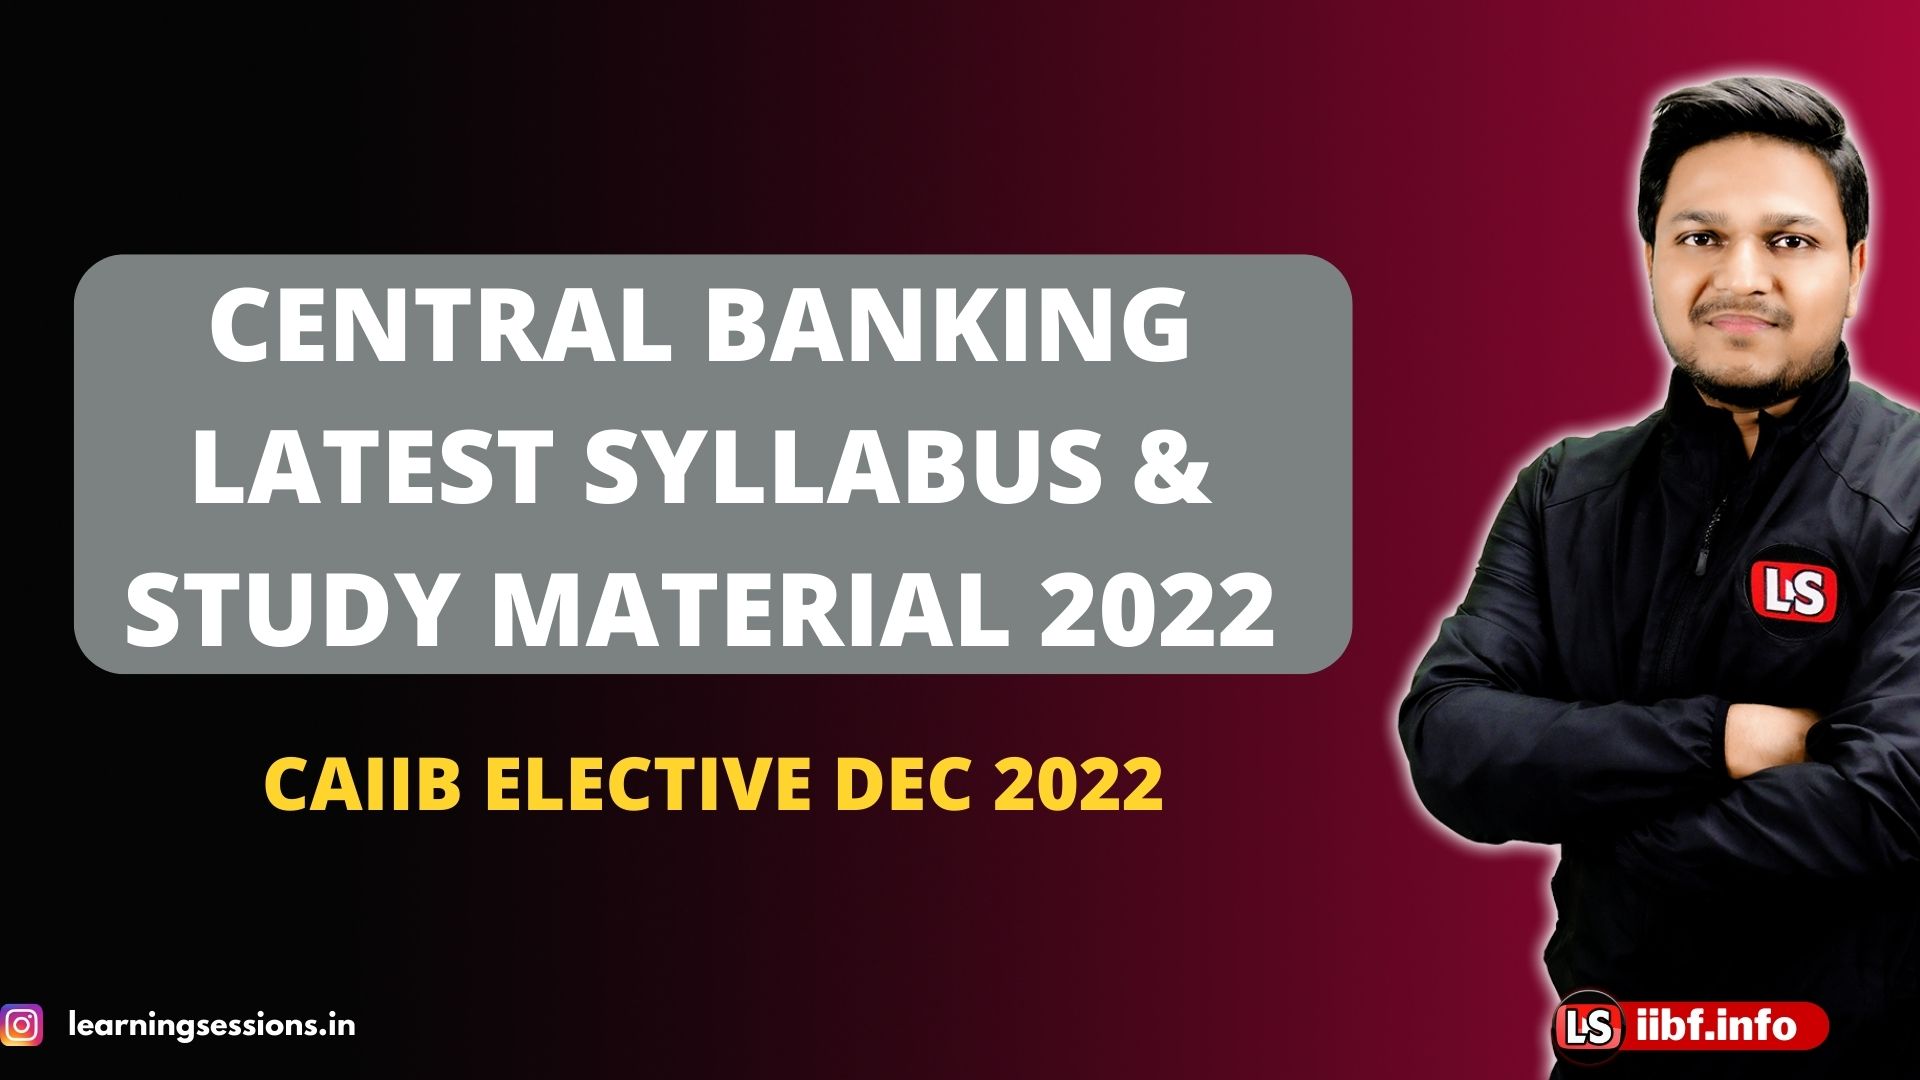 CAIIB Central Banking Syllabus 2022 | CAIIB Elective Dec 2022